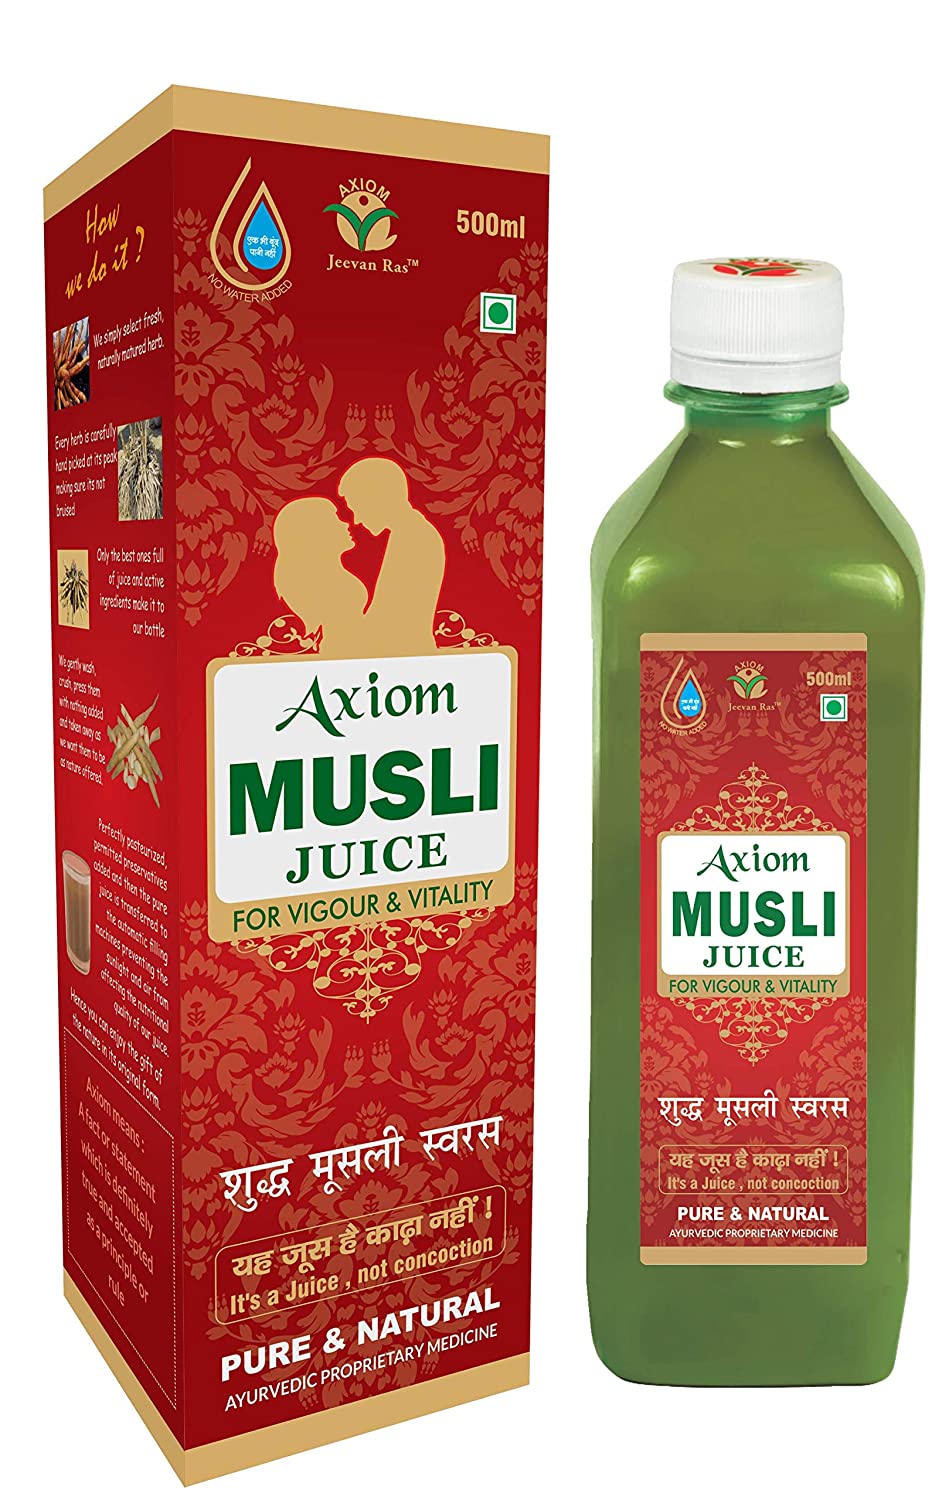 Axiom Musli Juice Image